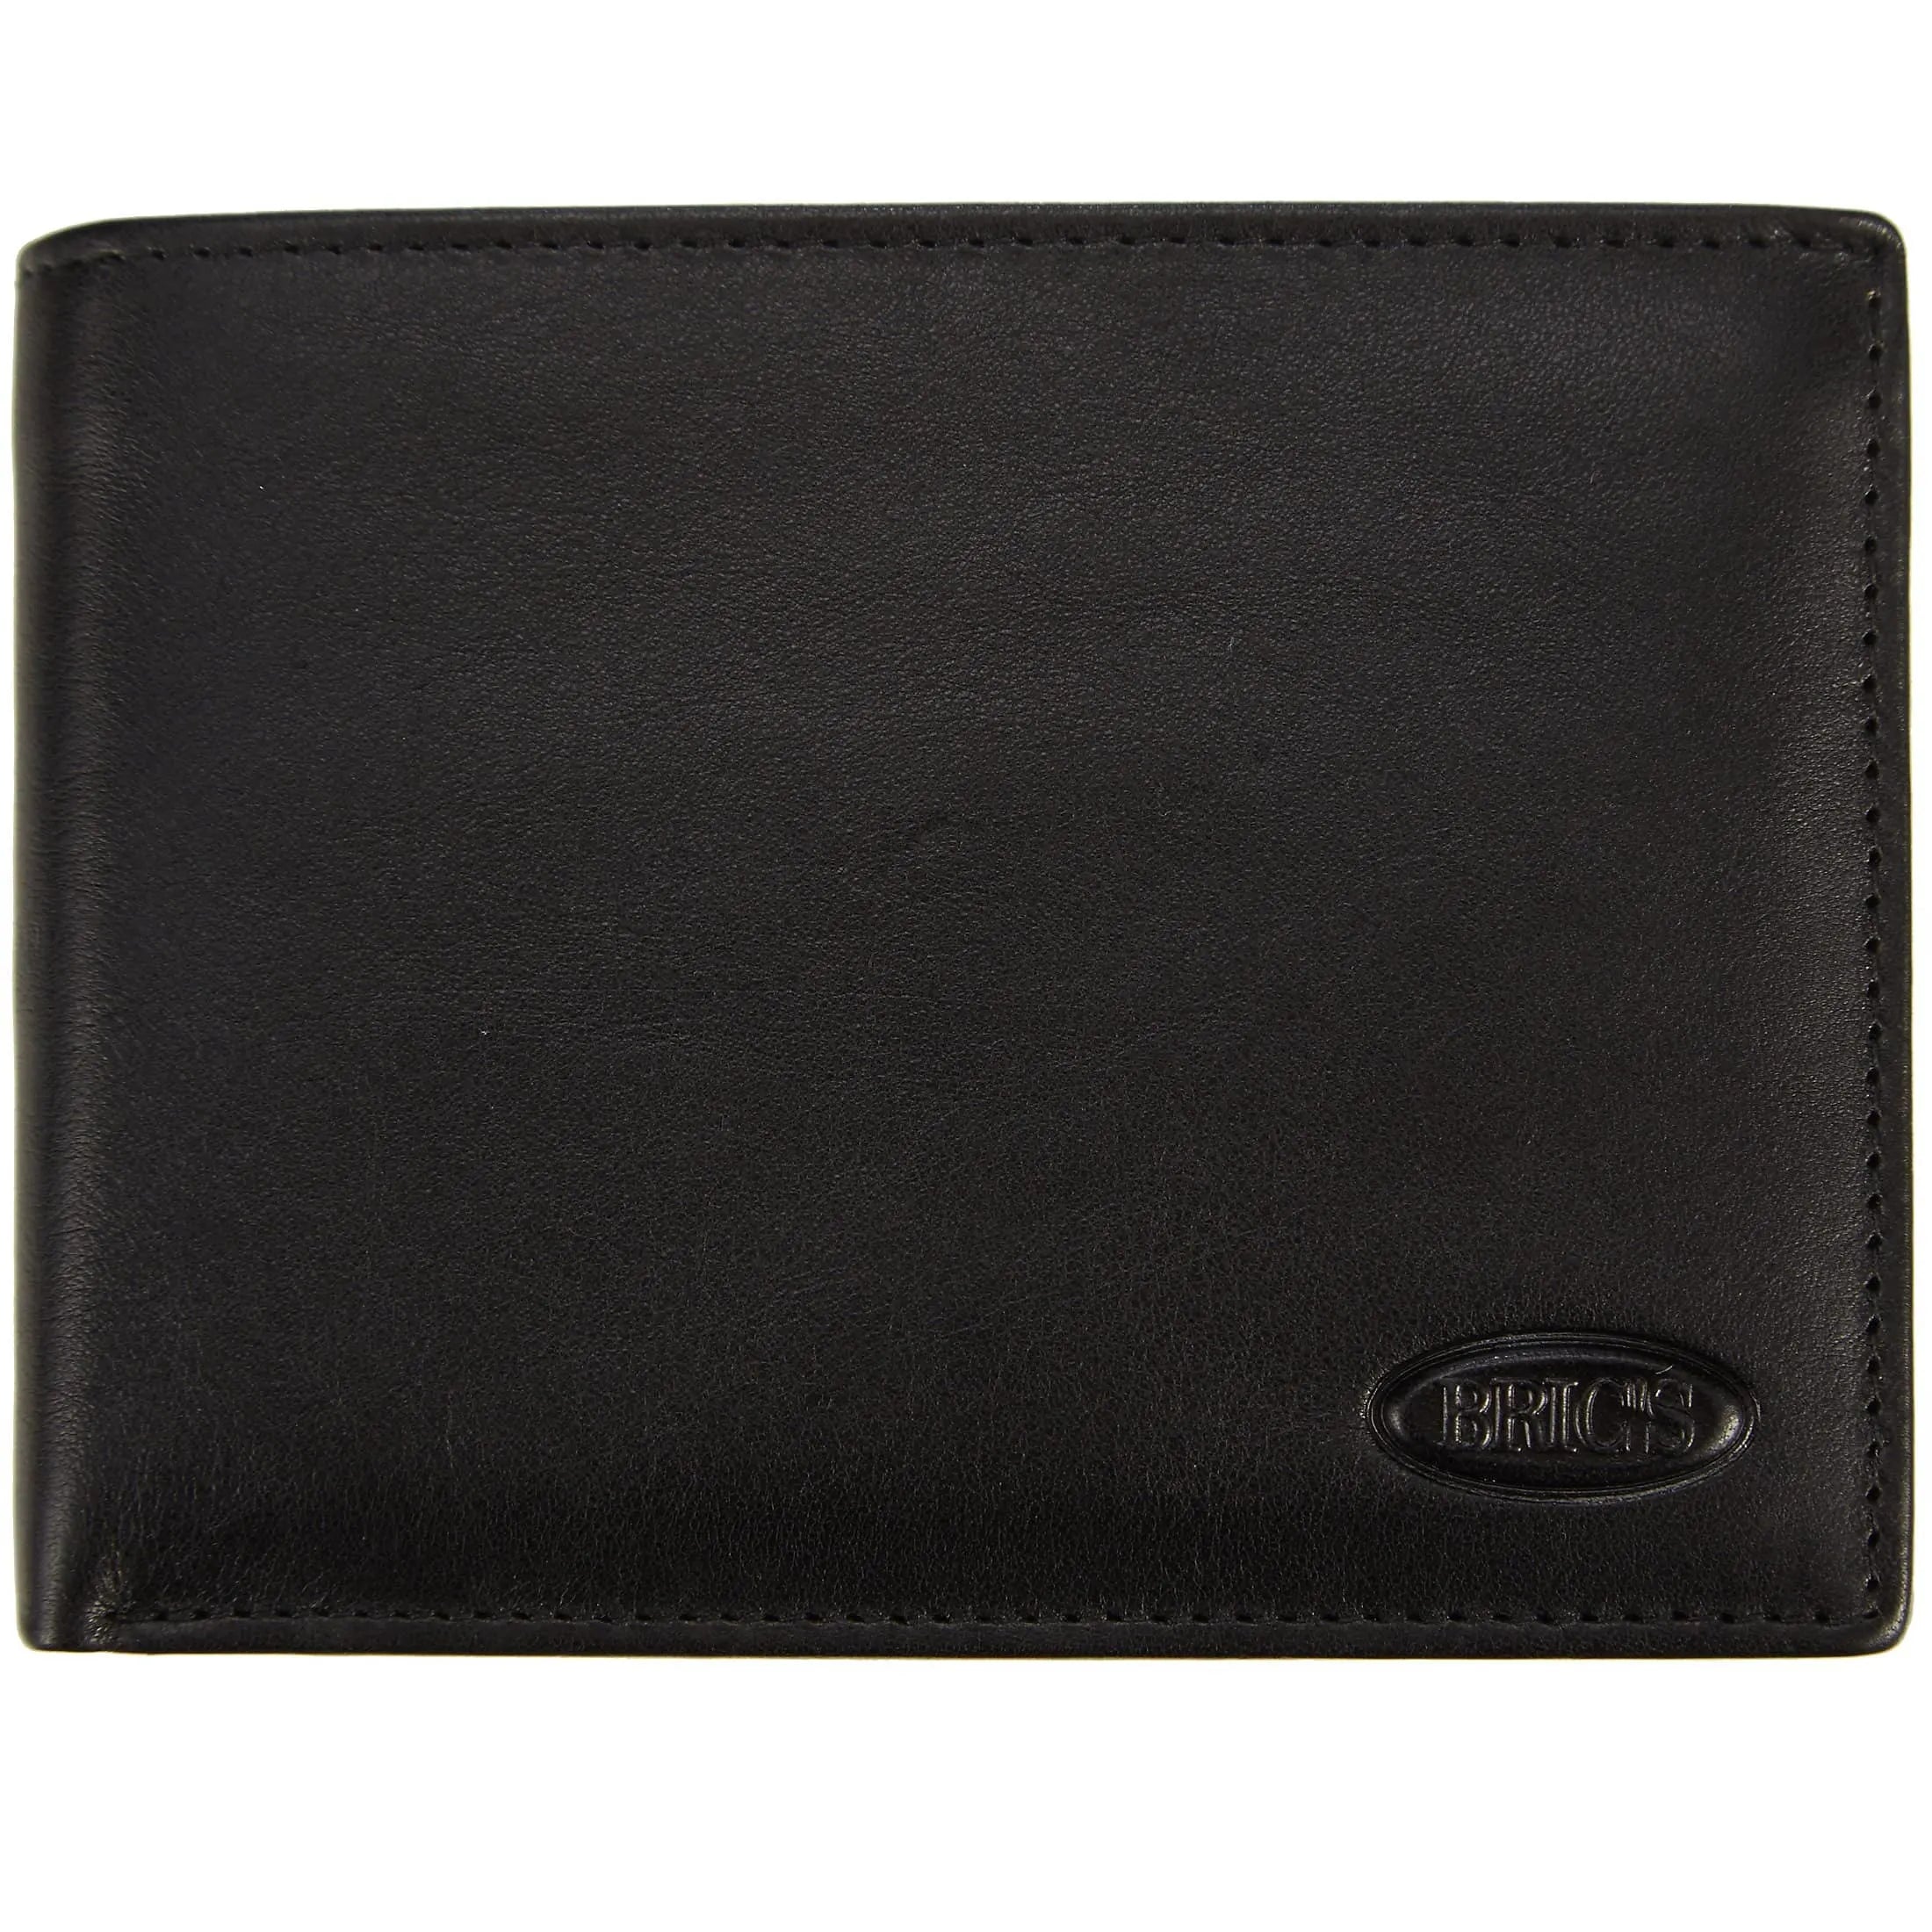 Brics Monte Rosa wallet RFID 12 cm - brown